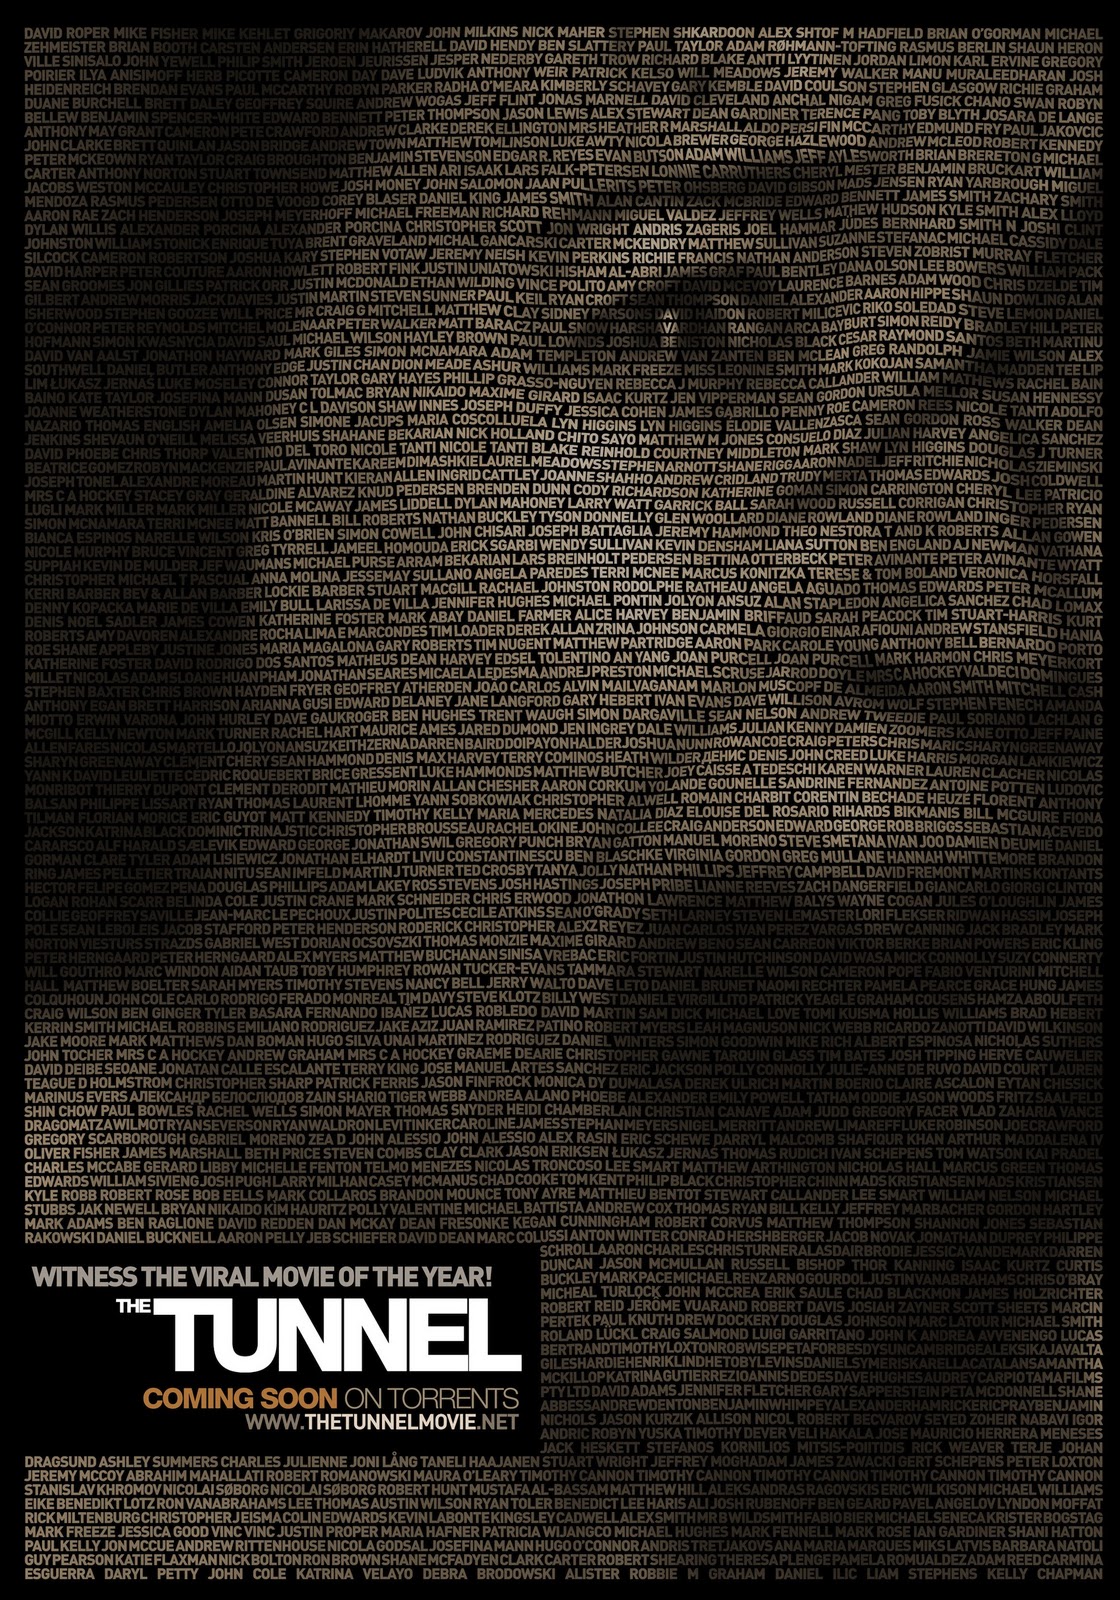 The Tunnel Movie movie